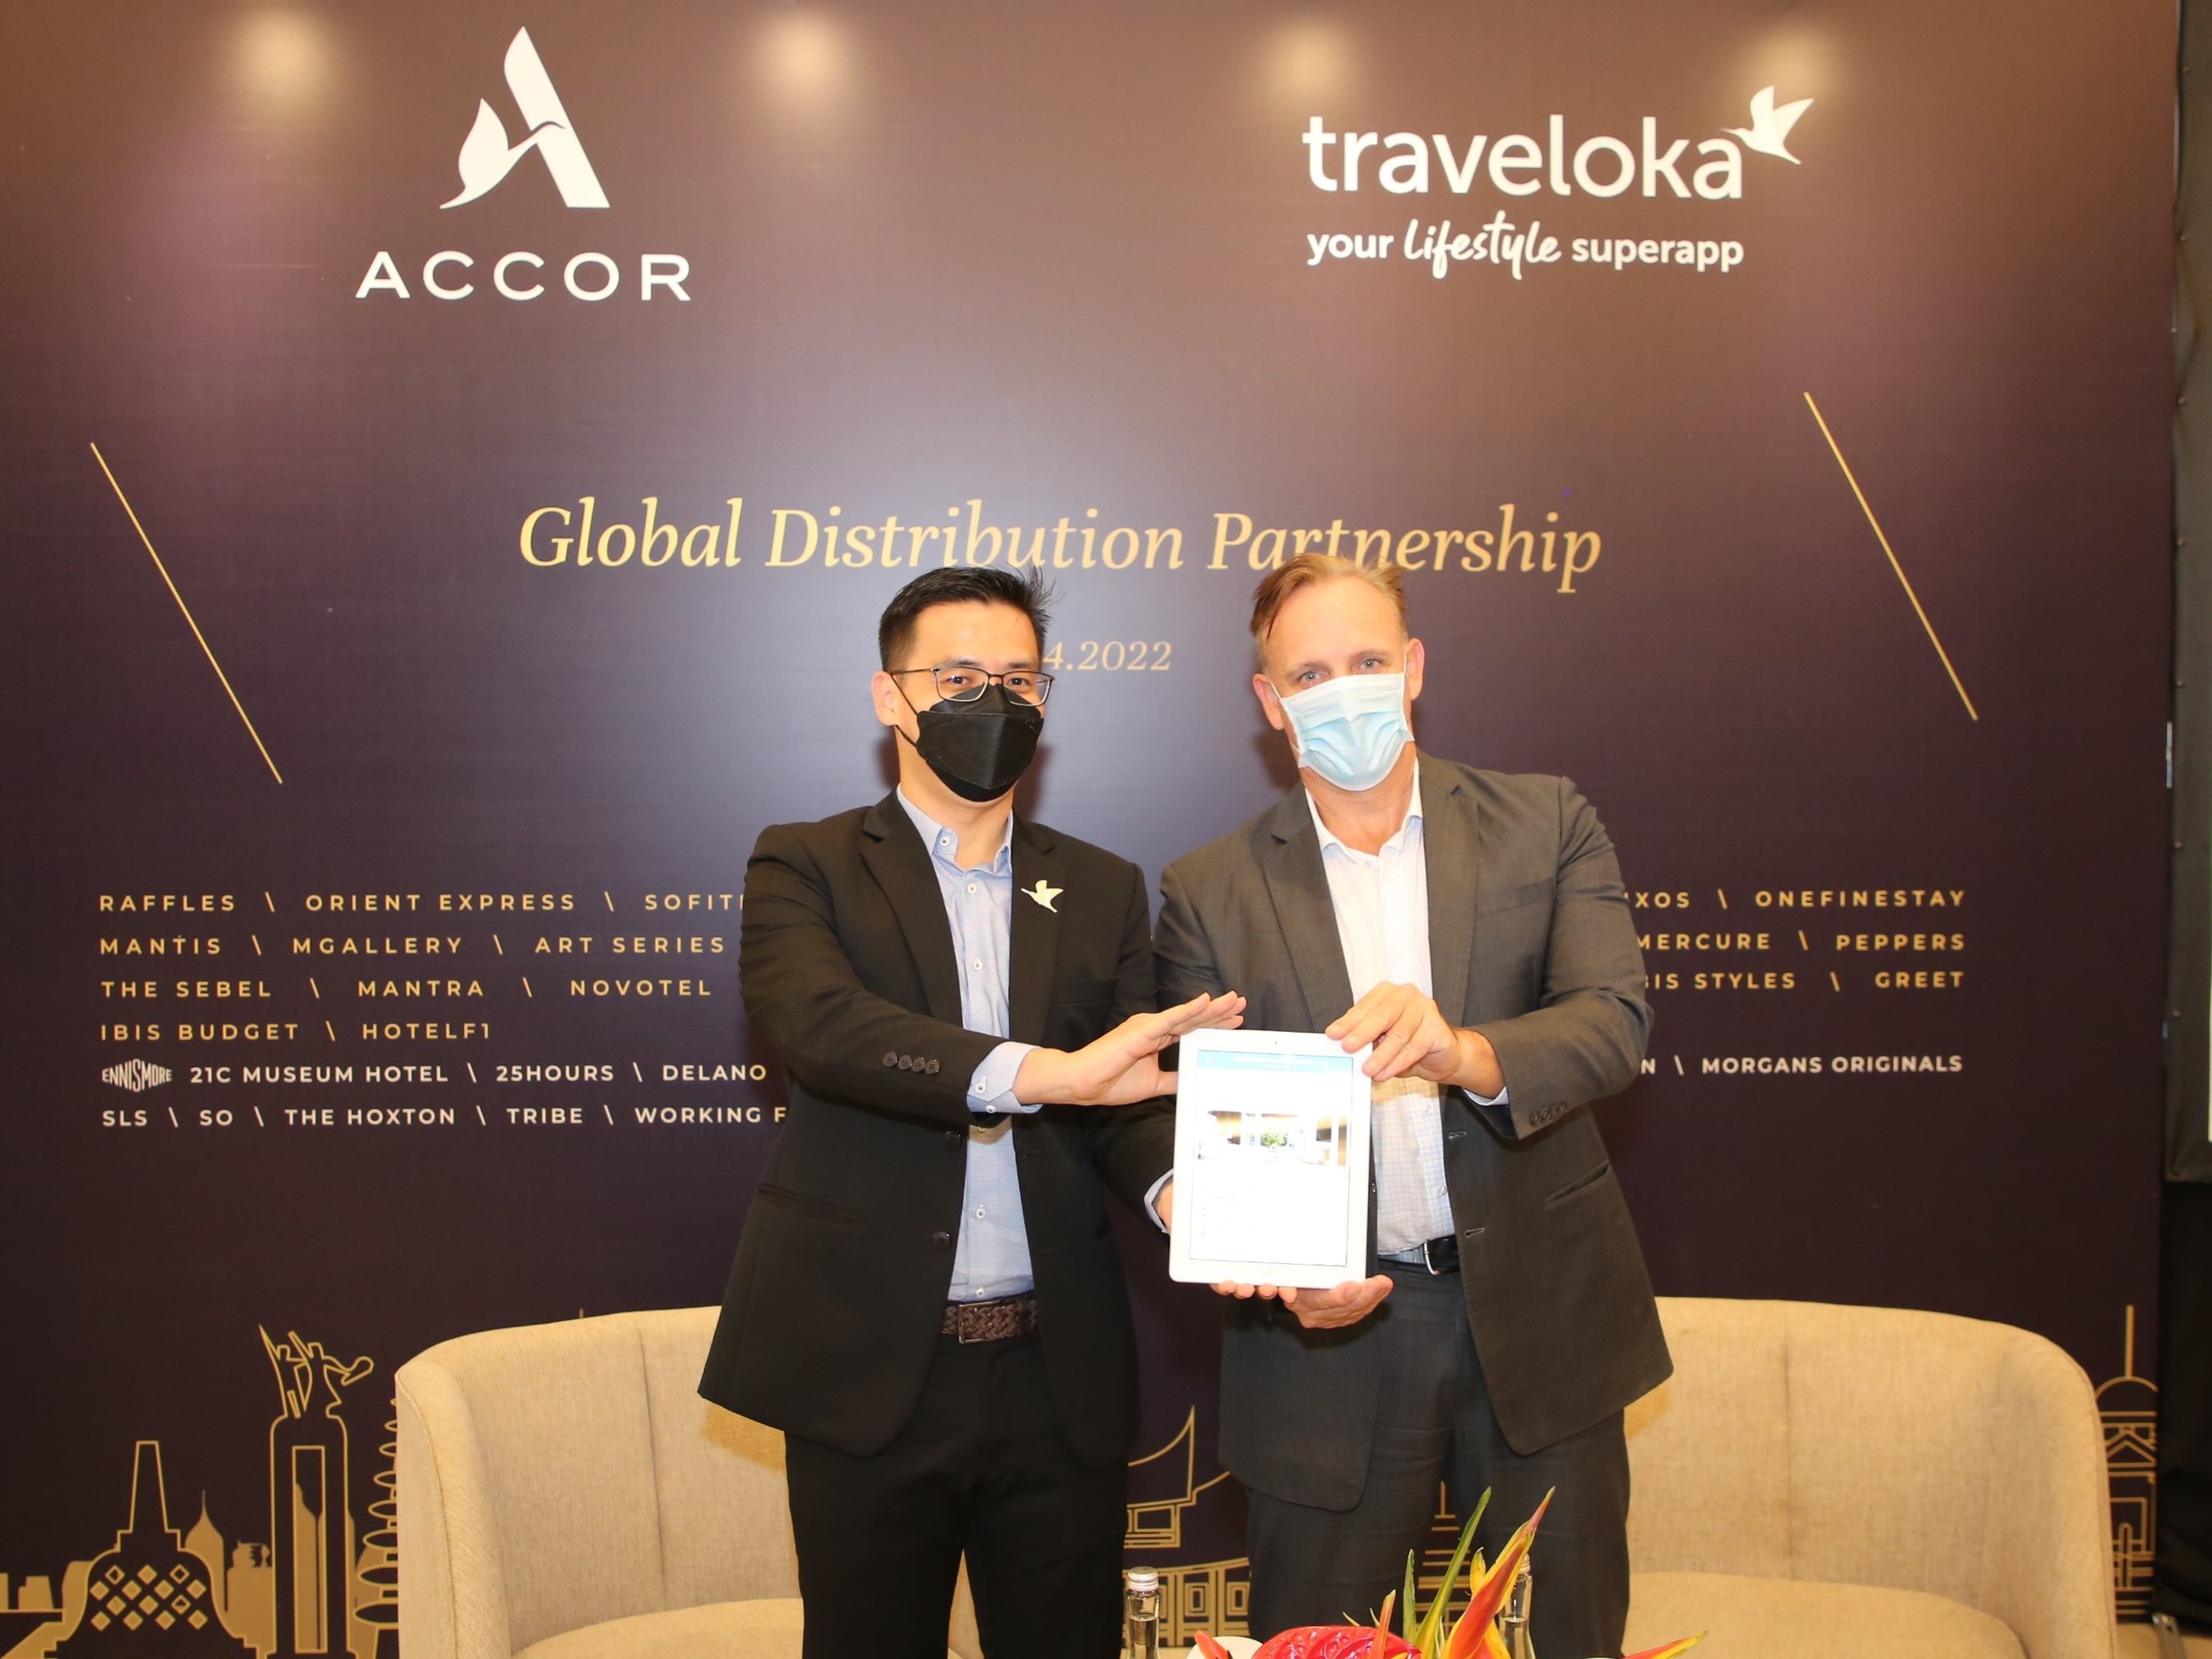 Accor partners with Traveloka to expand its global distribution